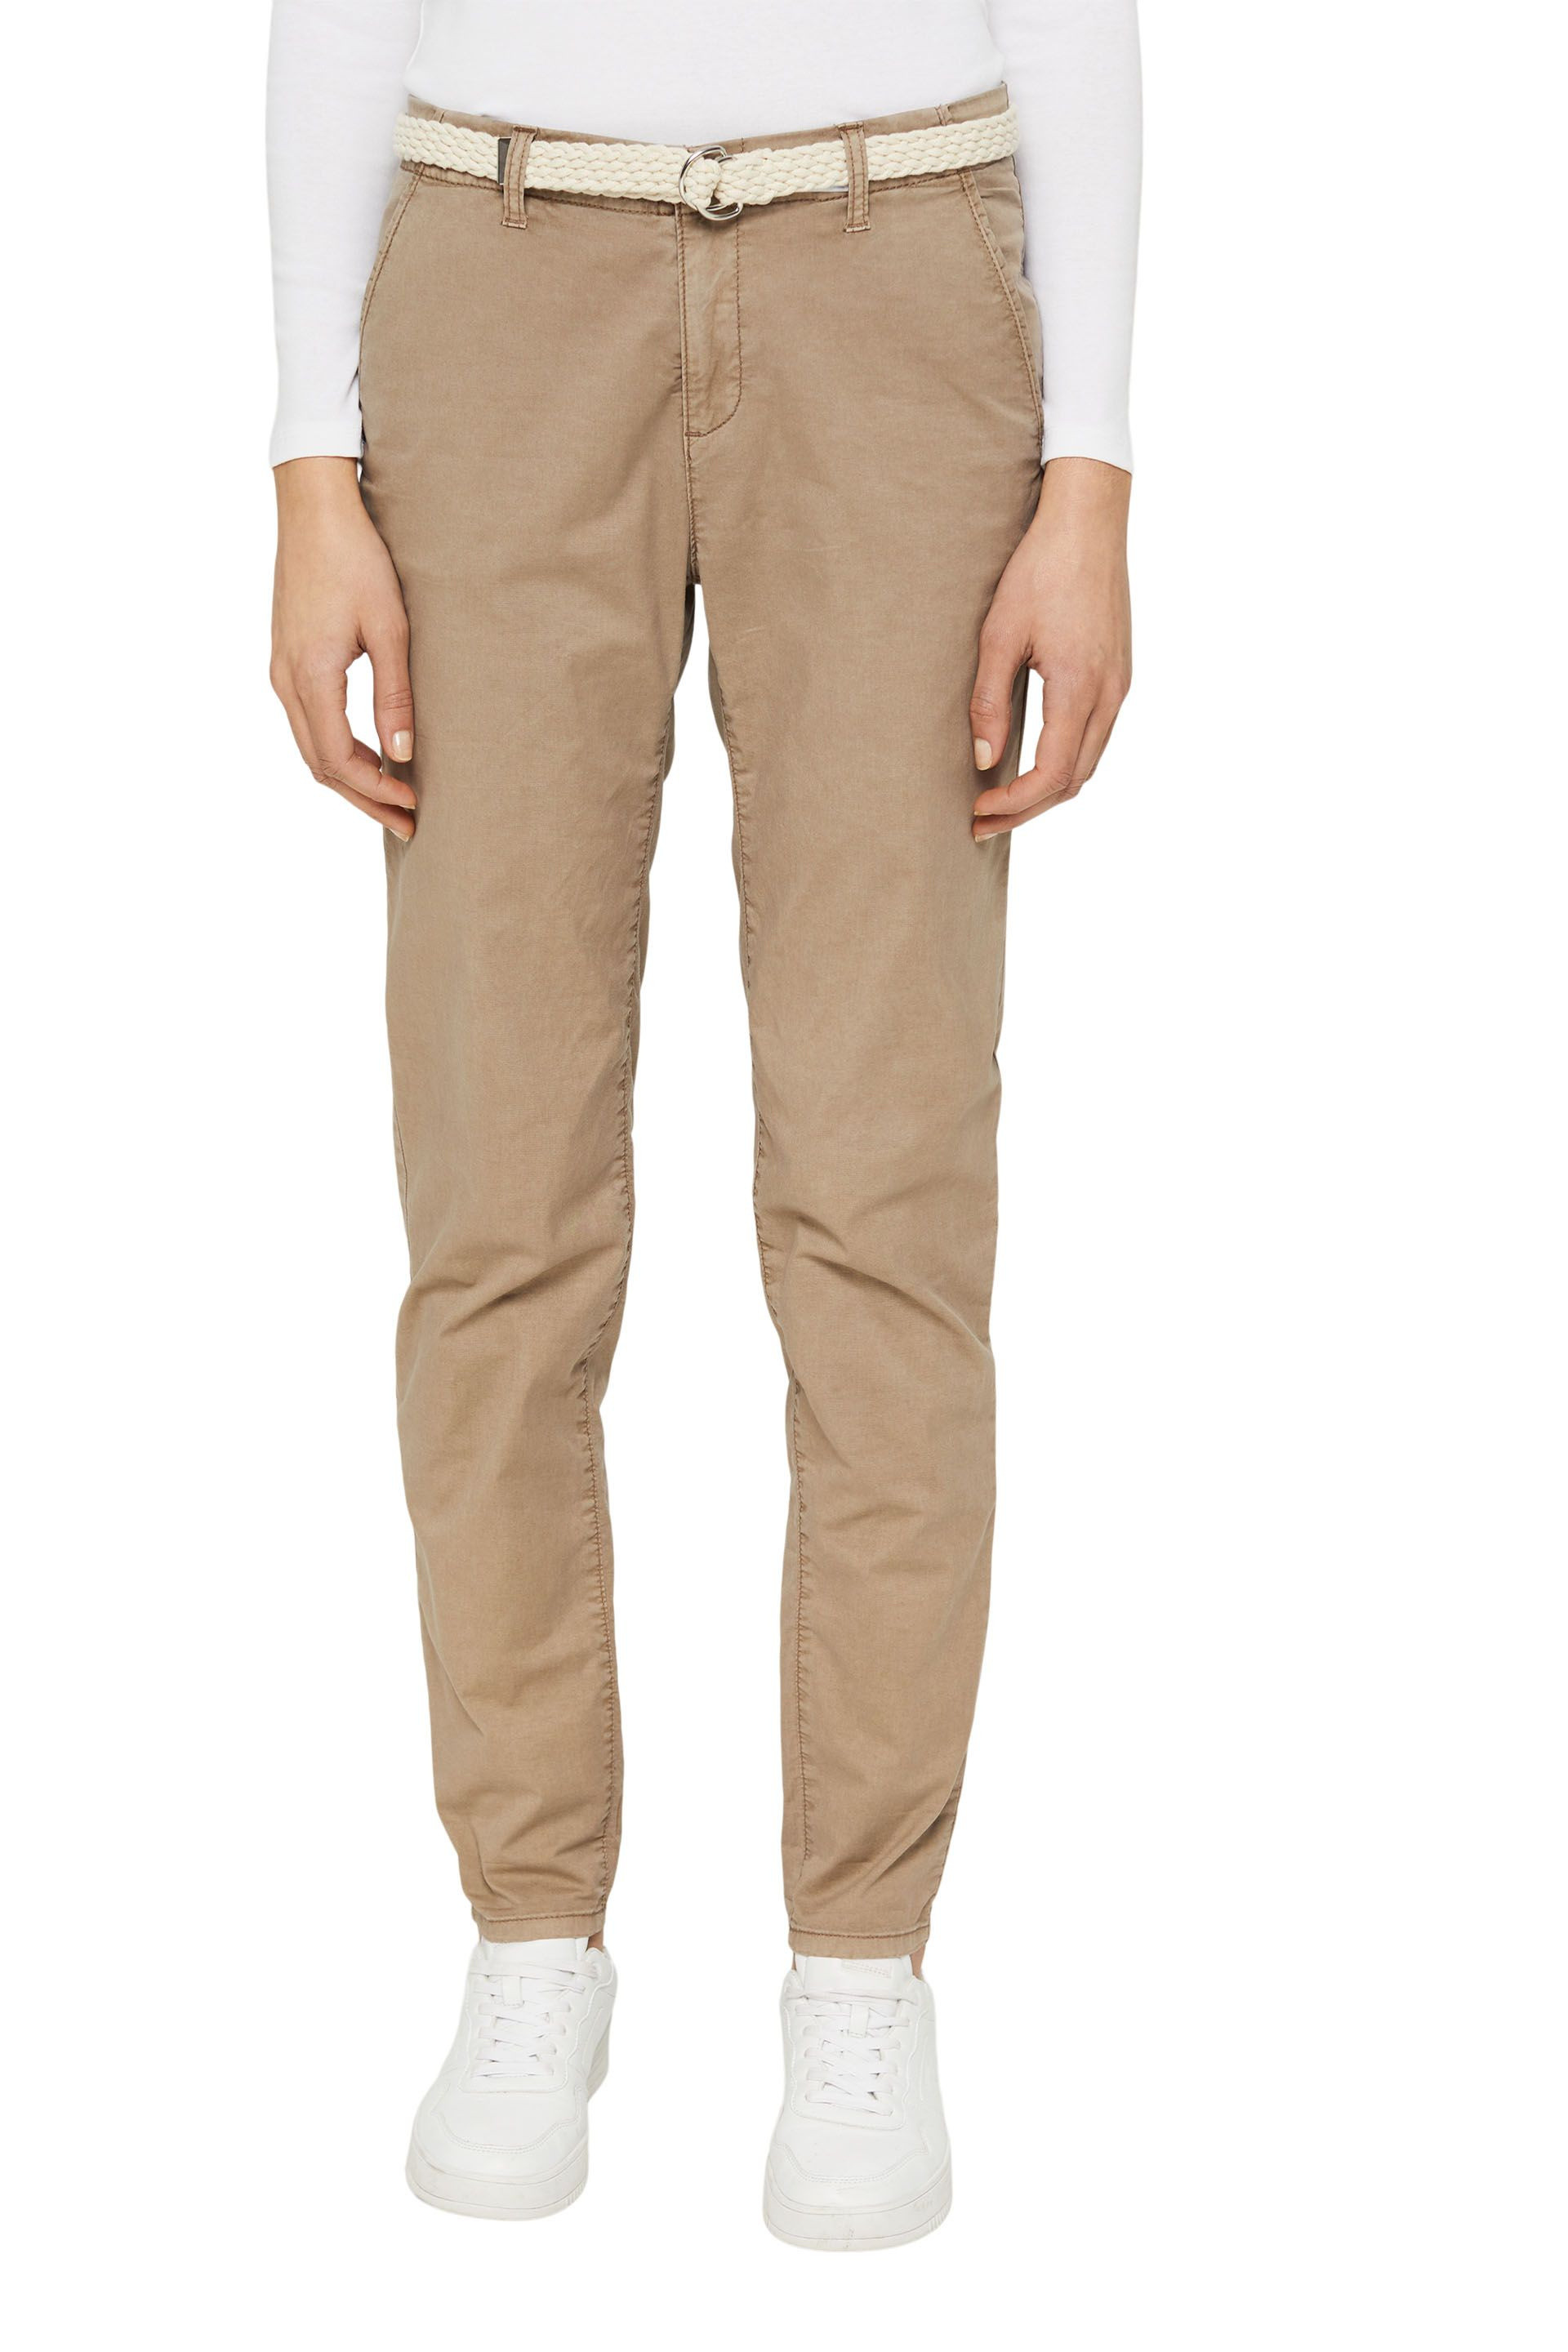 Pantaloni chino con cintura intrecciata, Beige torrone, large image number 1